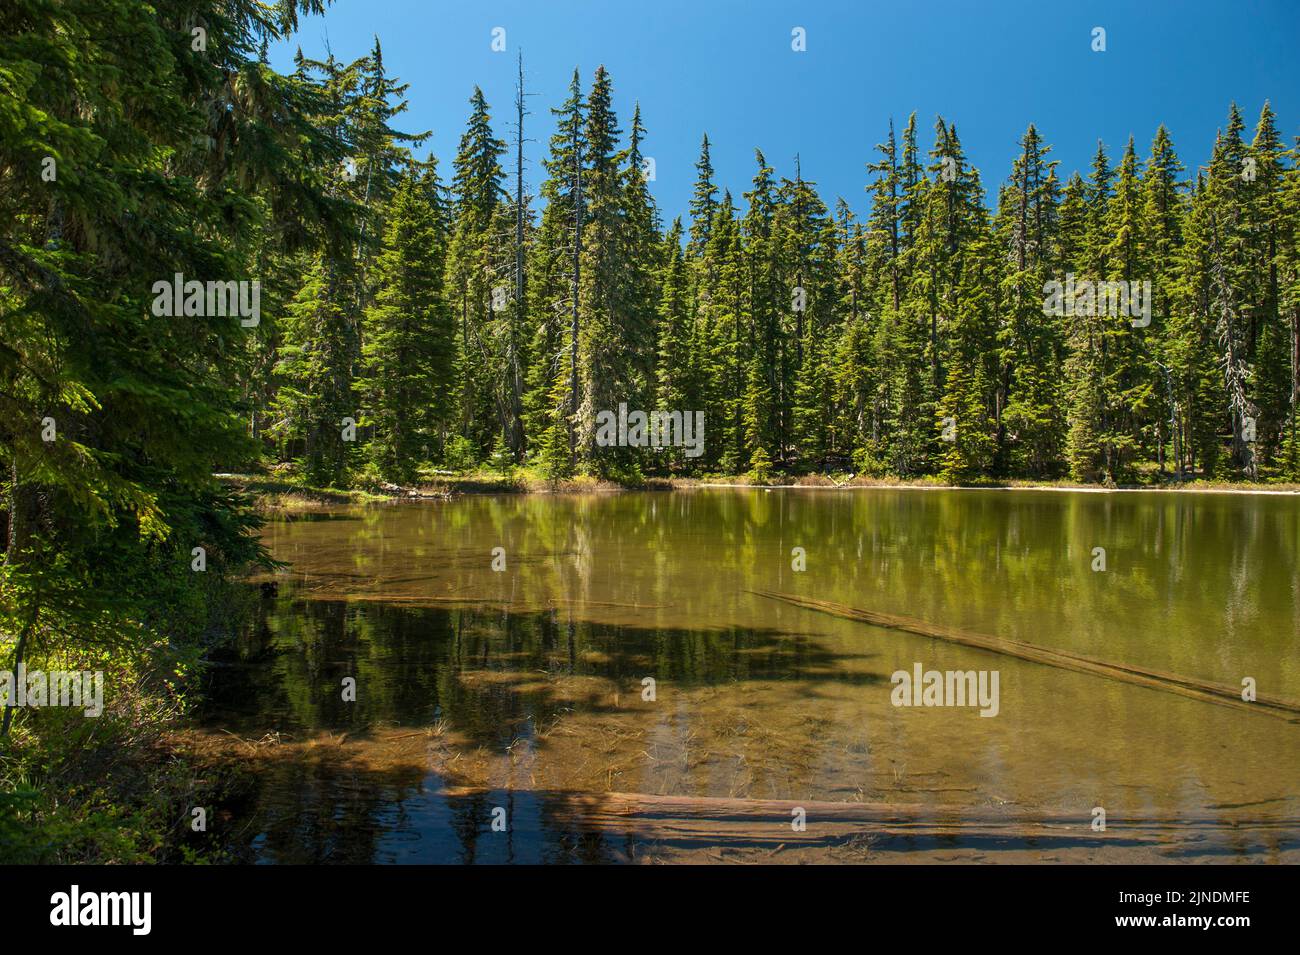 Un pequeño lago sin nombre en la milla 1911,1 en el Pacific Crest Trail, cerca de Willamette Pass, Oregon. Foto de stock